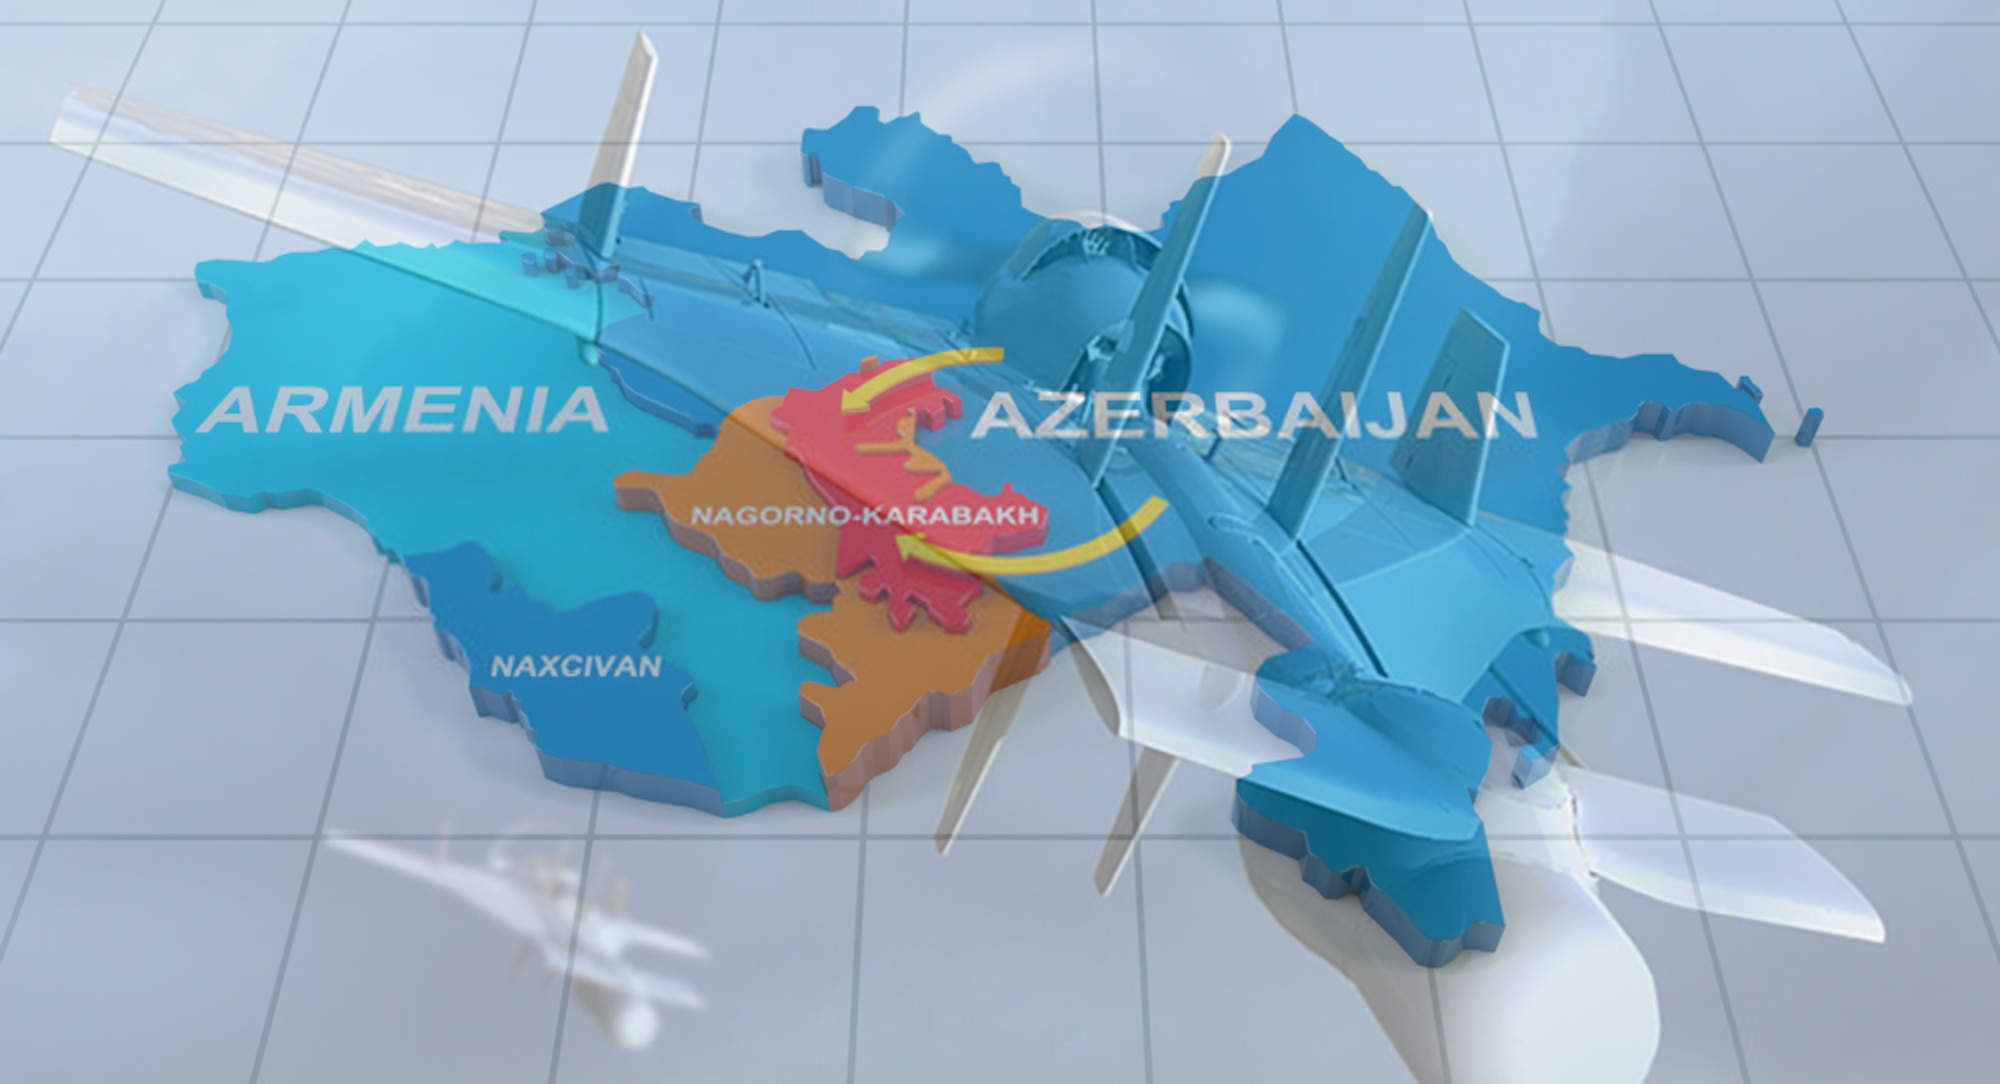 Azerbaijan  Today's latest from Al Jazeera